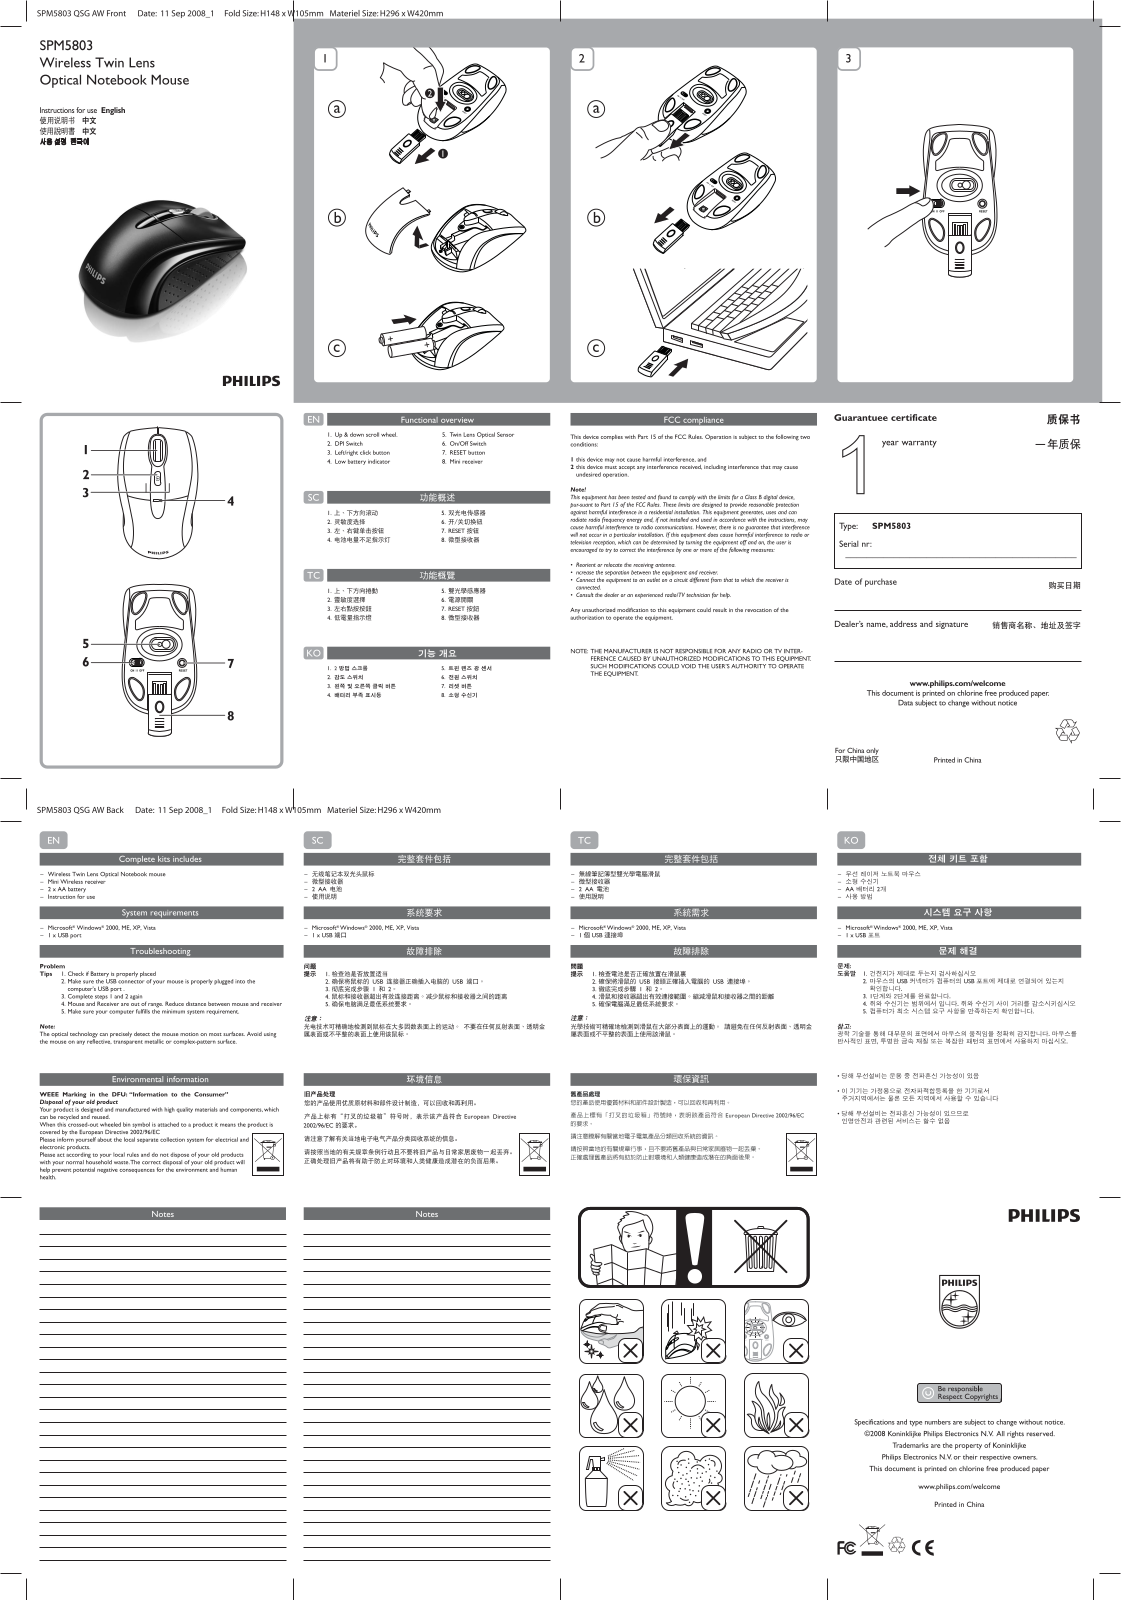 Philips SPM5803 User Manual